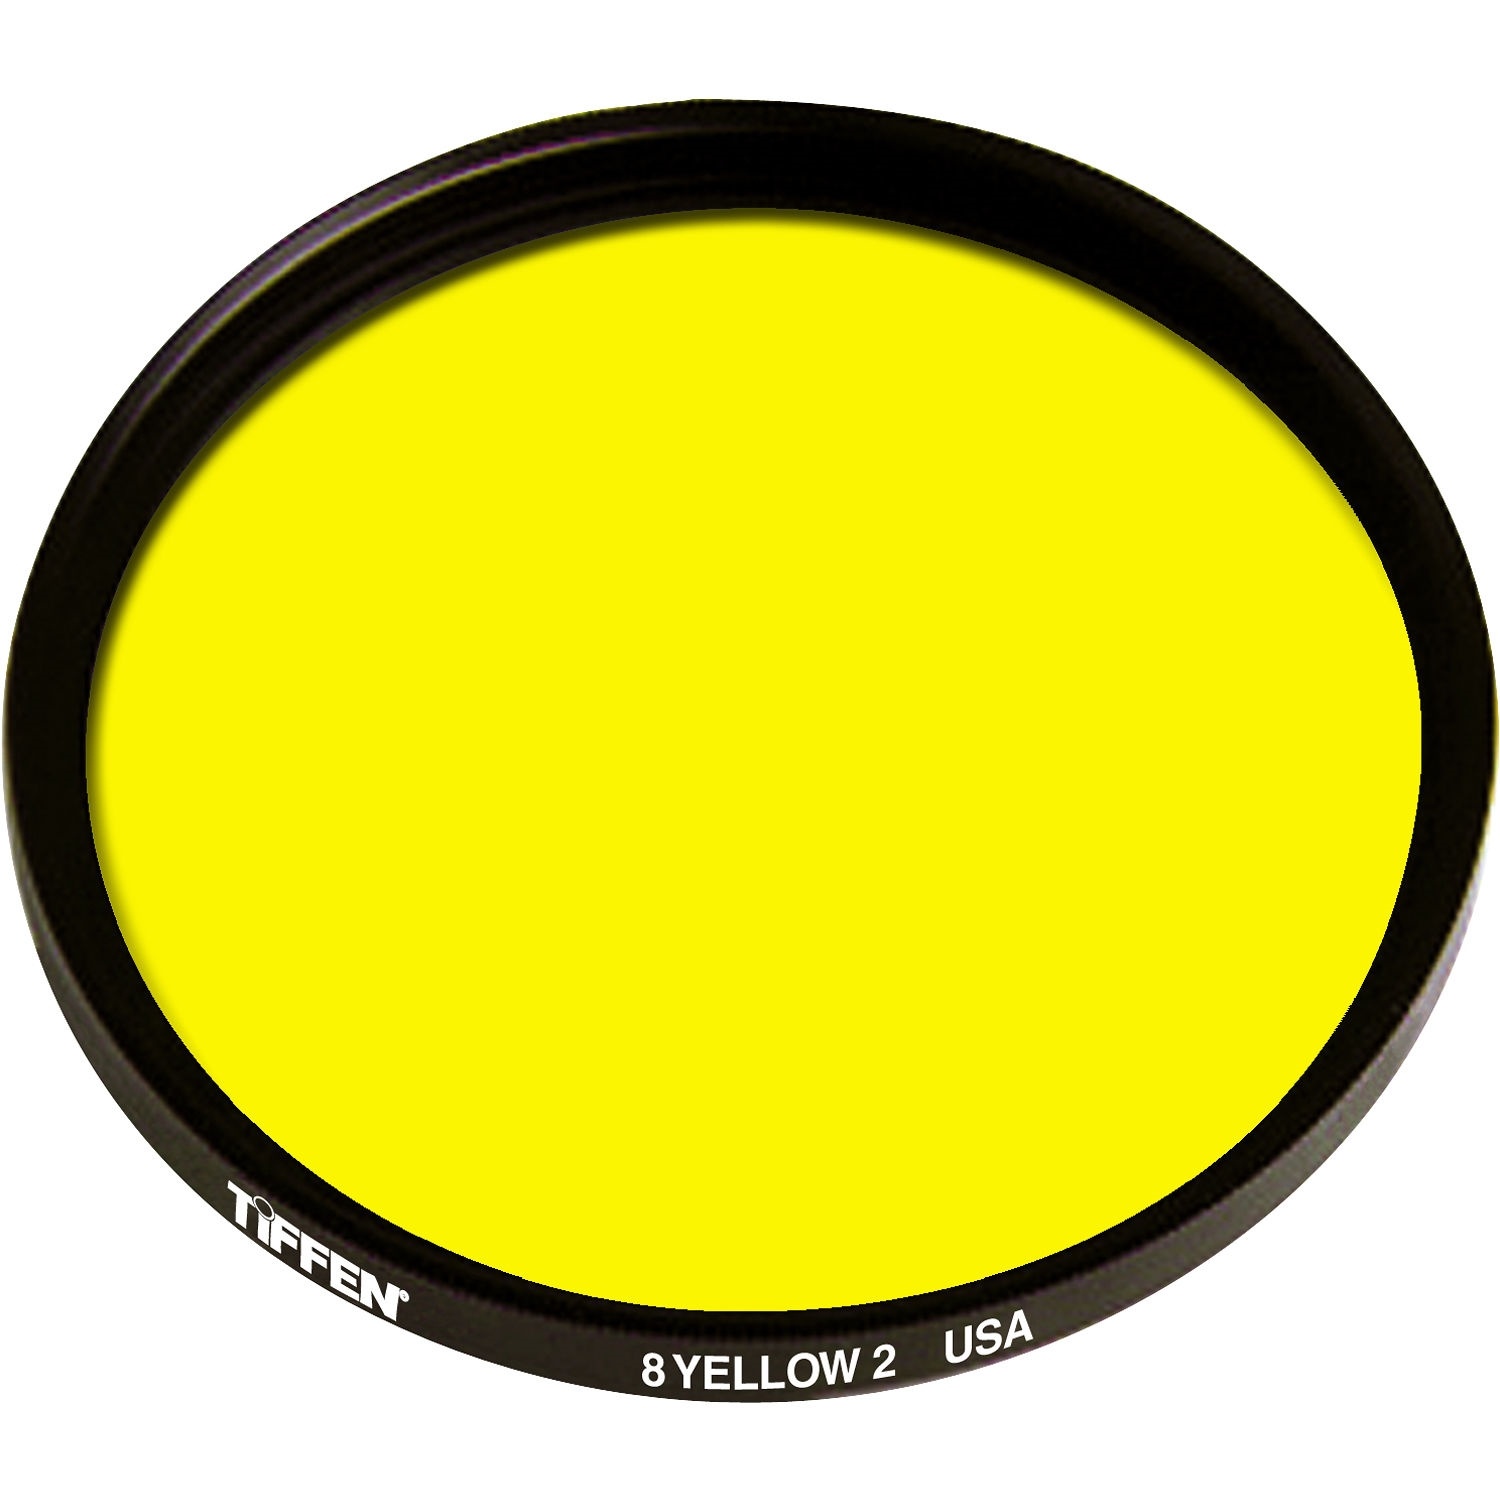 Tiffen 40.5mm Yellow 2 8 Glass Filter for Black & White Film